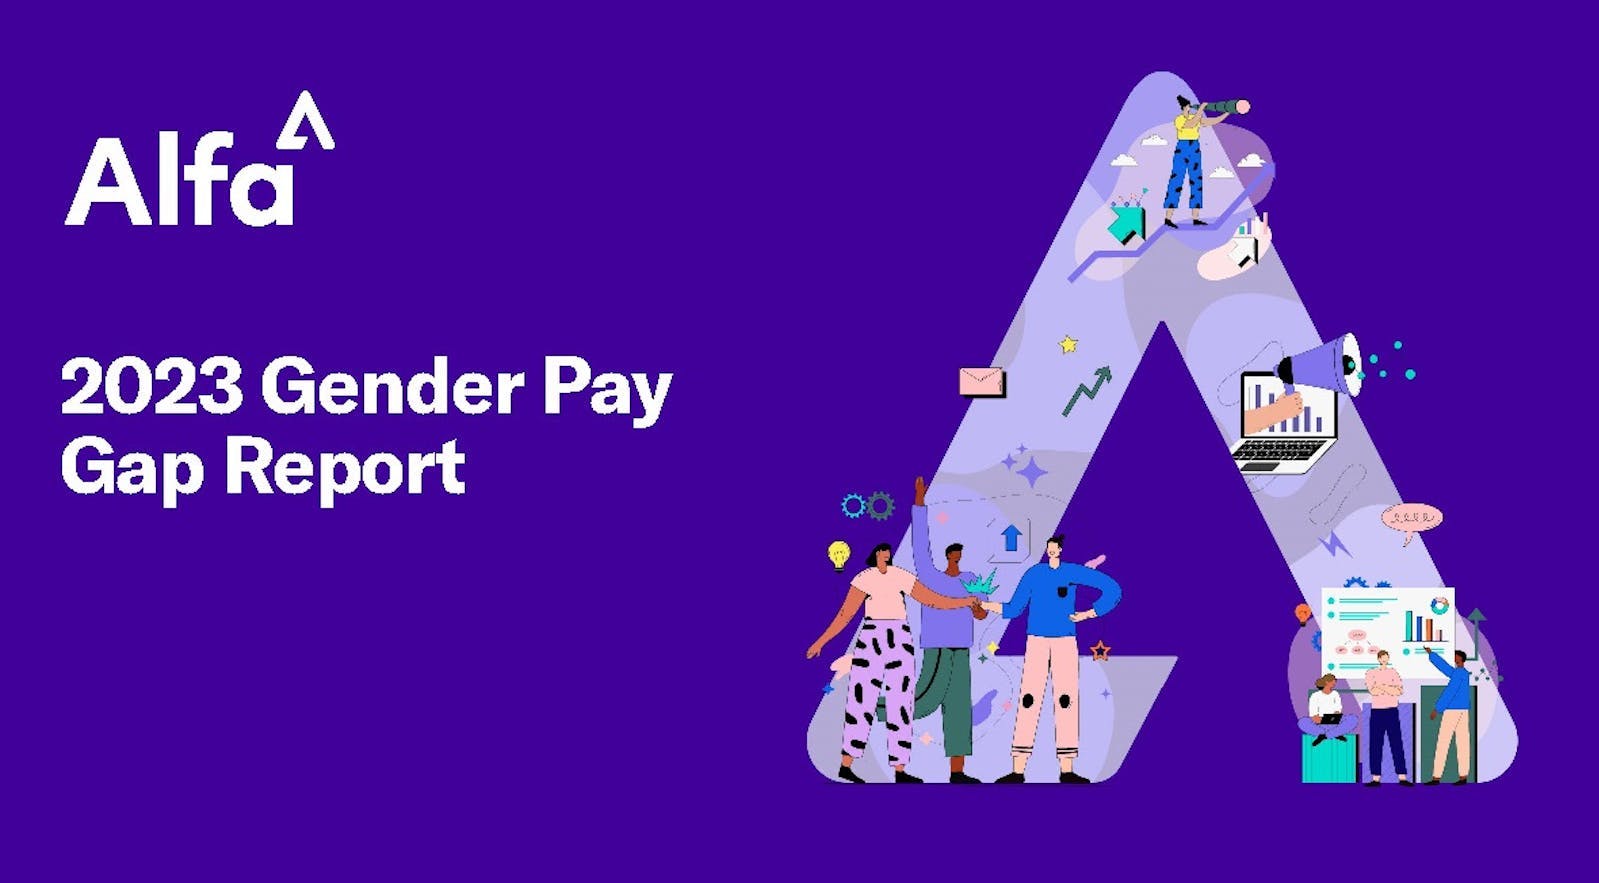 artwork for Alfa's gender pay gap report for 2023